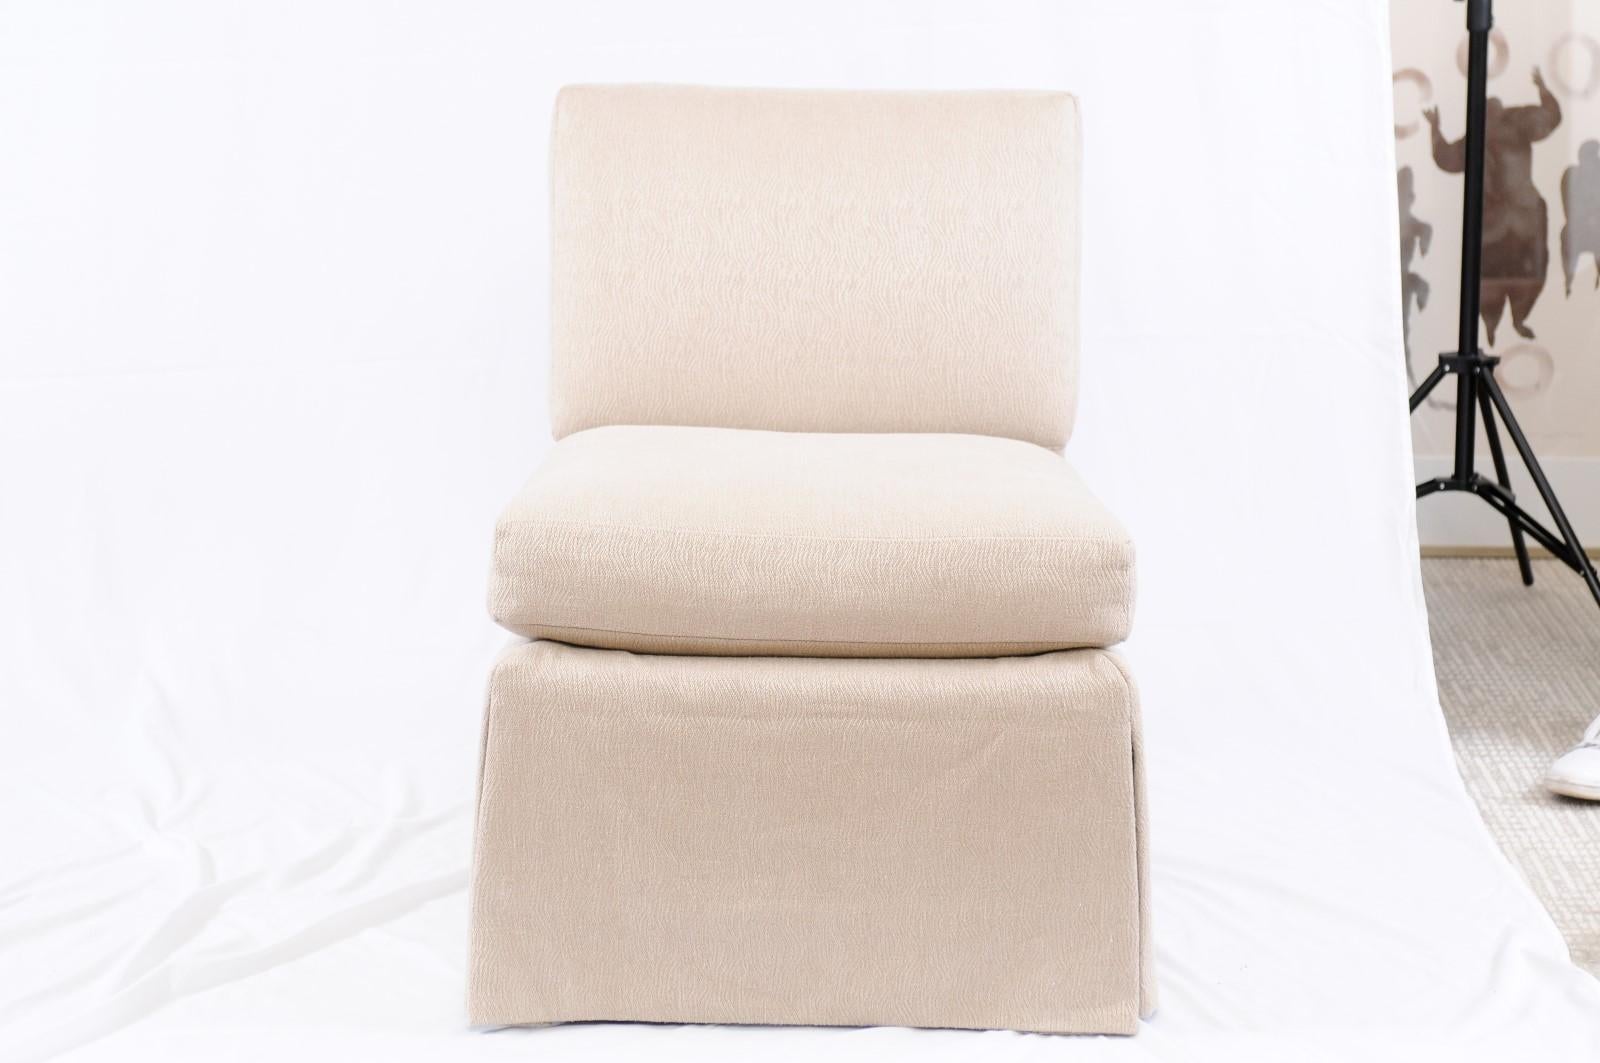 Classic slipper chair - 24” W x 31” D x 32” H, Seat: 20.5” H x 21” D. Standard, no welt.